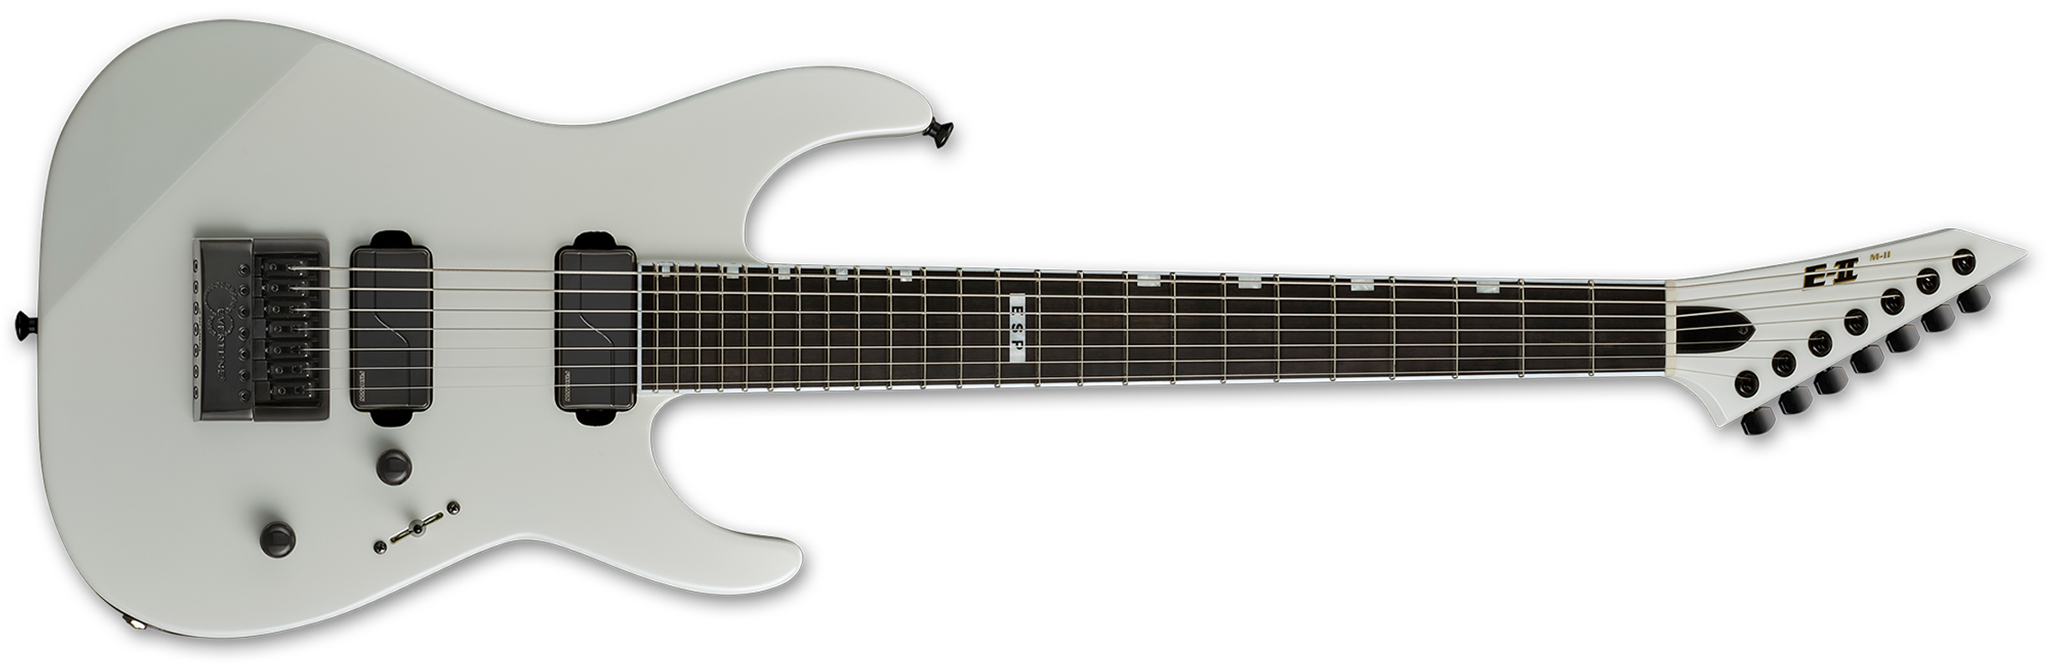 ESP E-II M-II 7B ET Pearl White 7-String Electric Guitar   